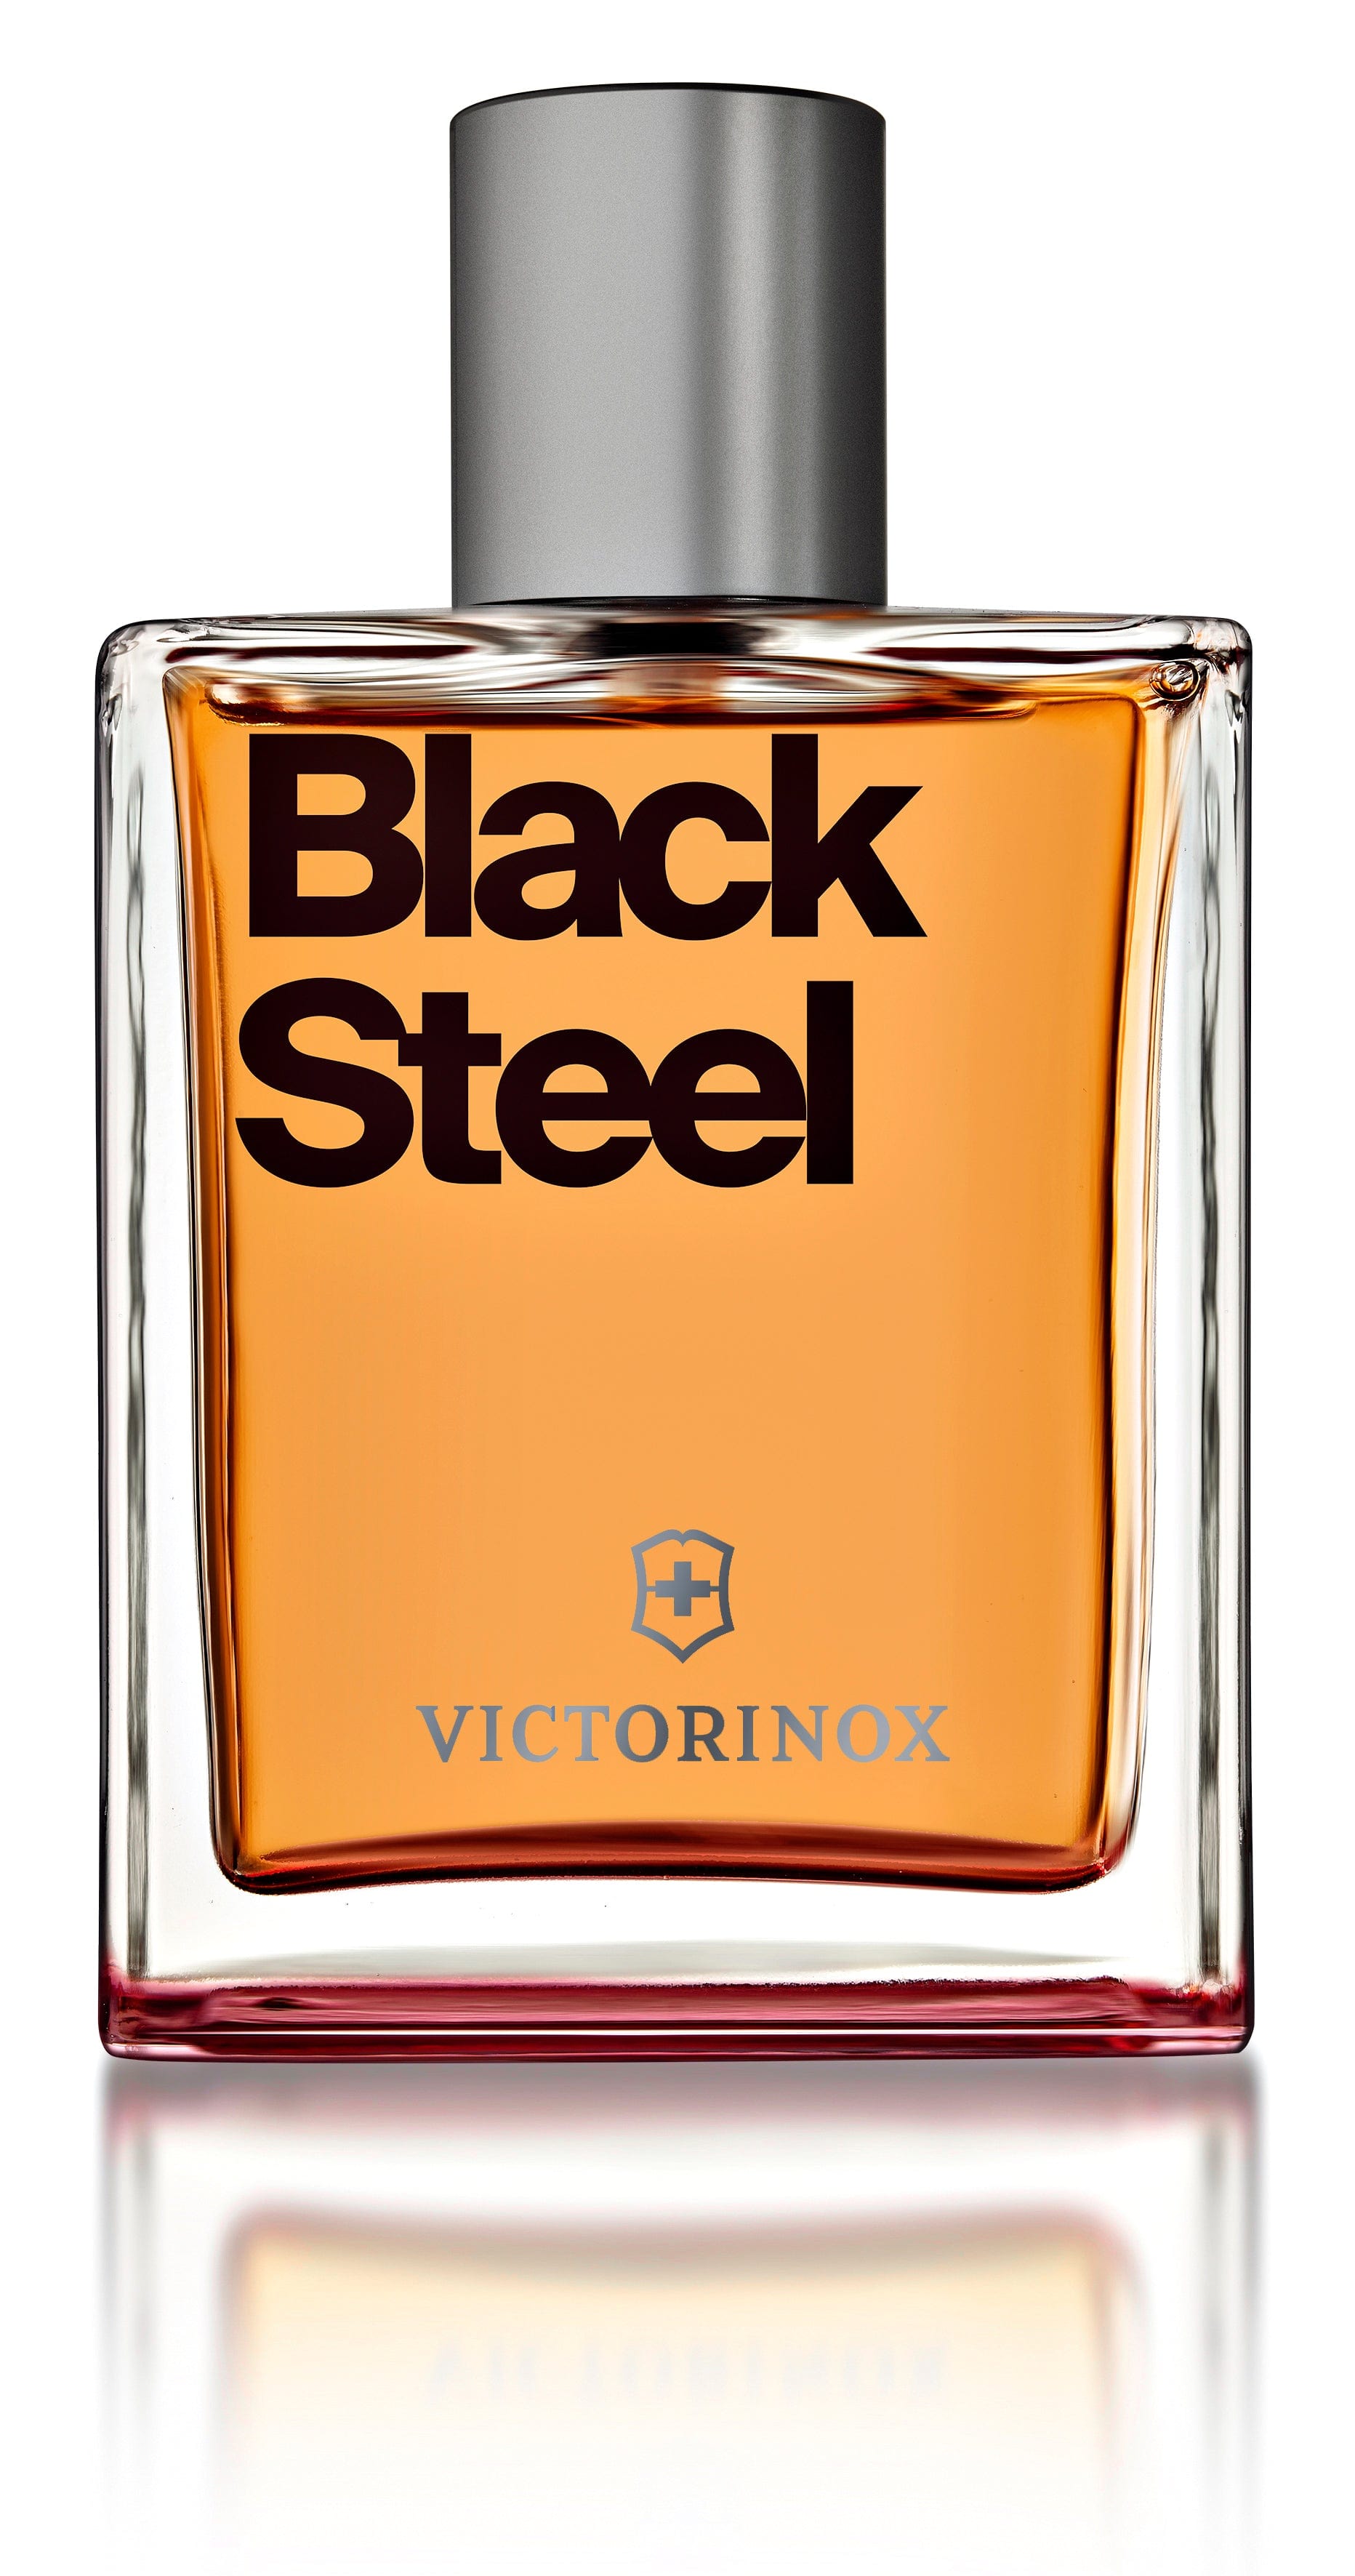 Victorinox Black Steel for Him EDT 100ml